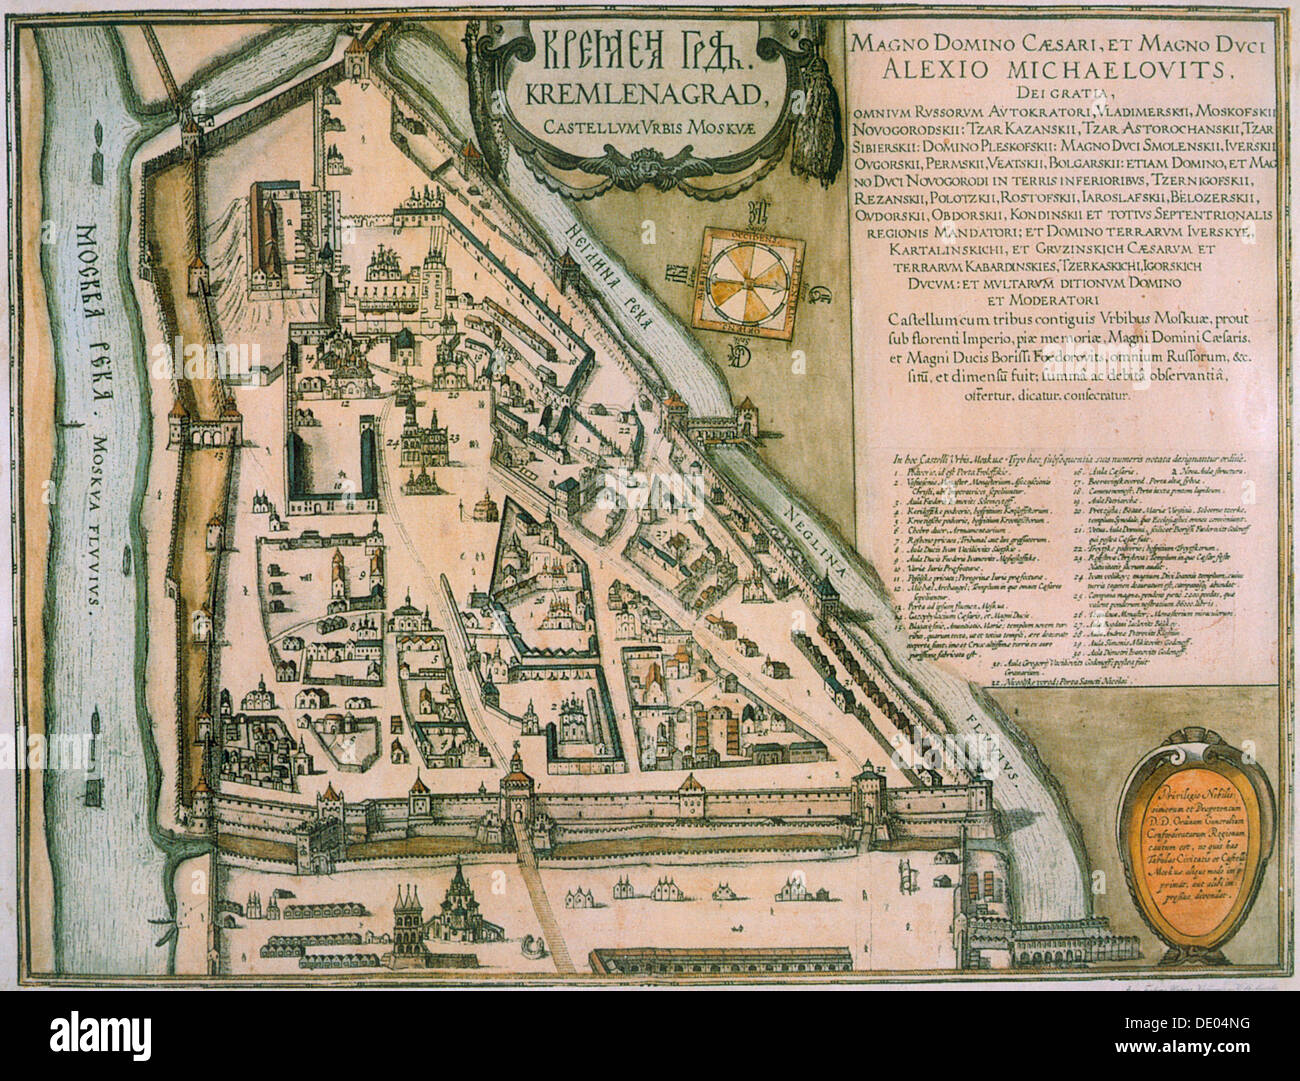 Map of the Moscow Kremlin (Castellum Urbis Moskvae), Russia, 1597. Artist: Willem Blaeu Stock Photo